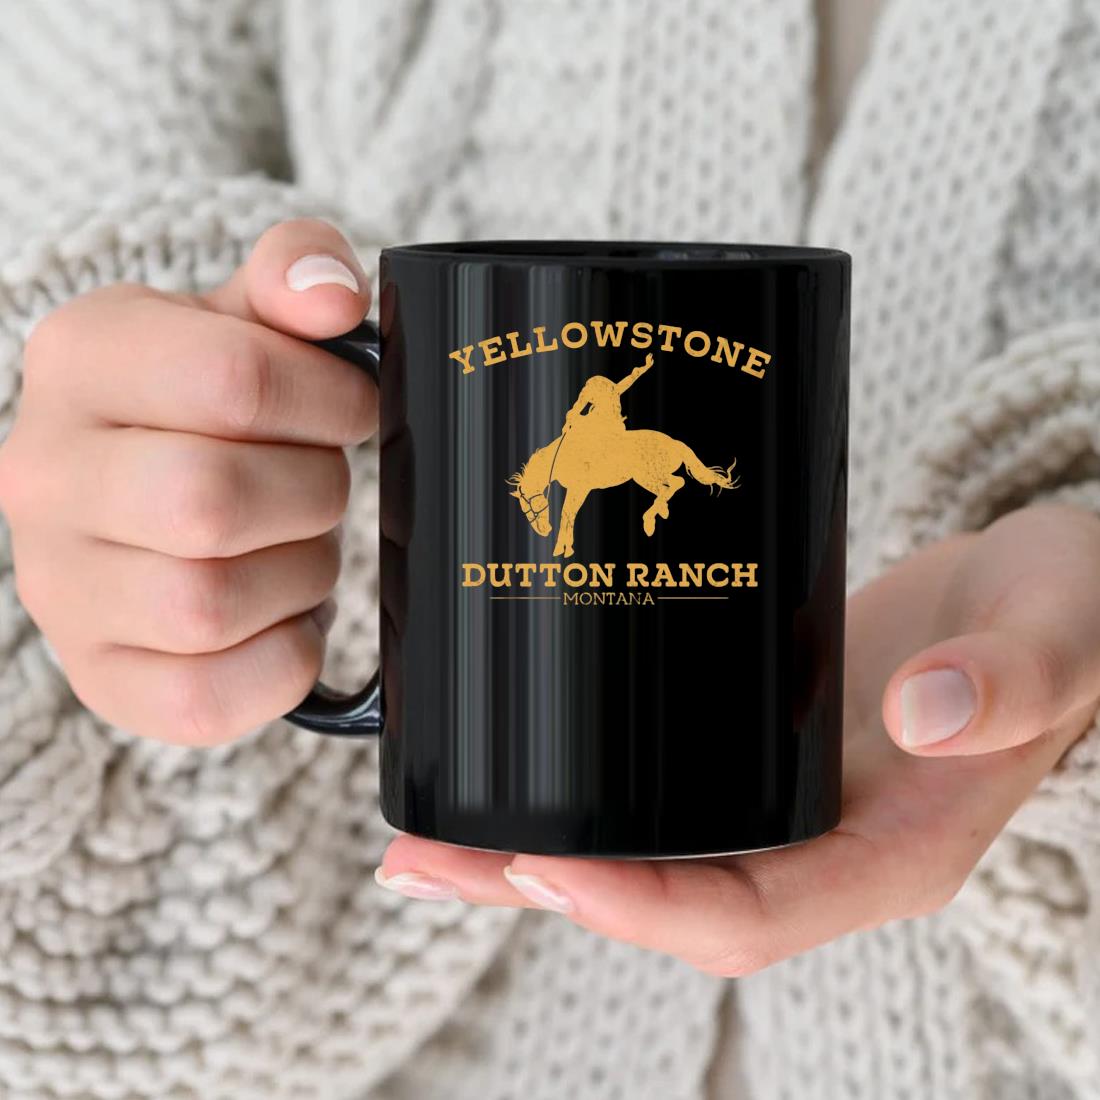 Yellowstone Dutton Ranch Montana 2022 Mug